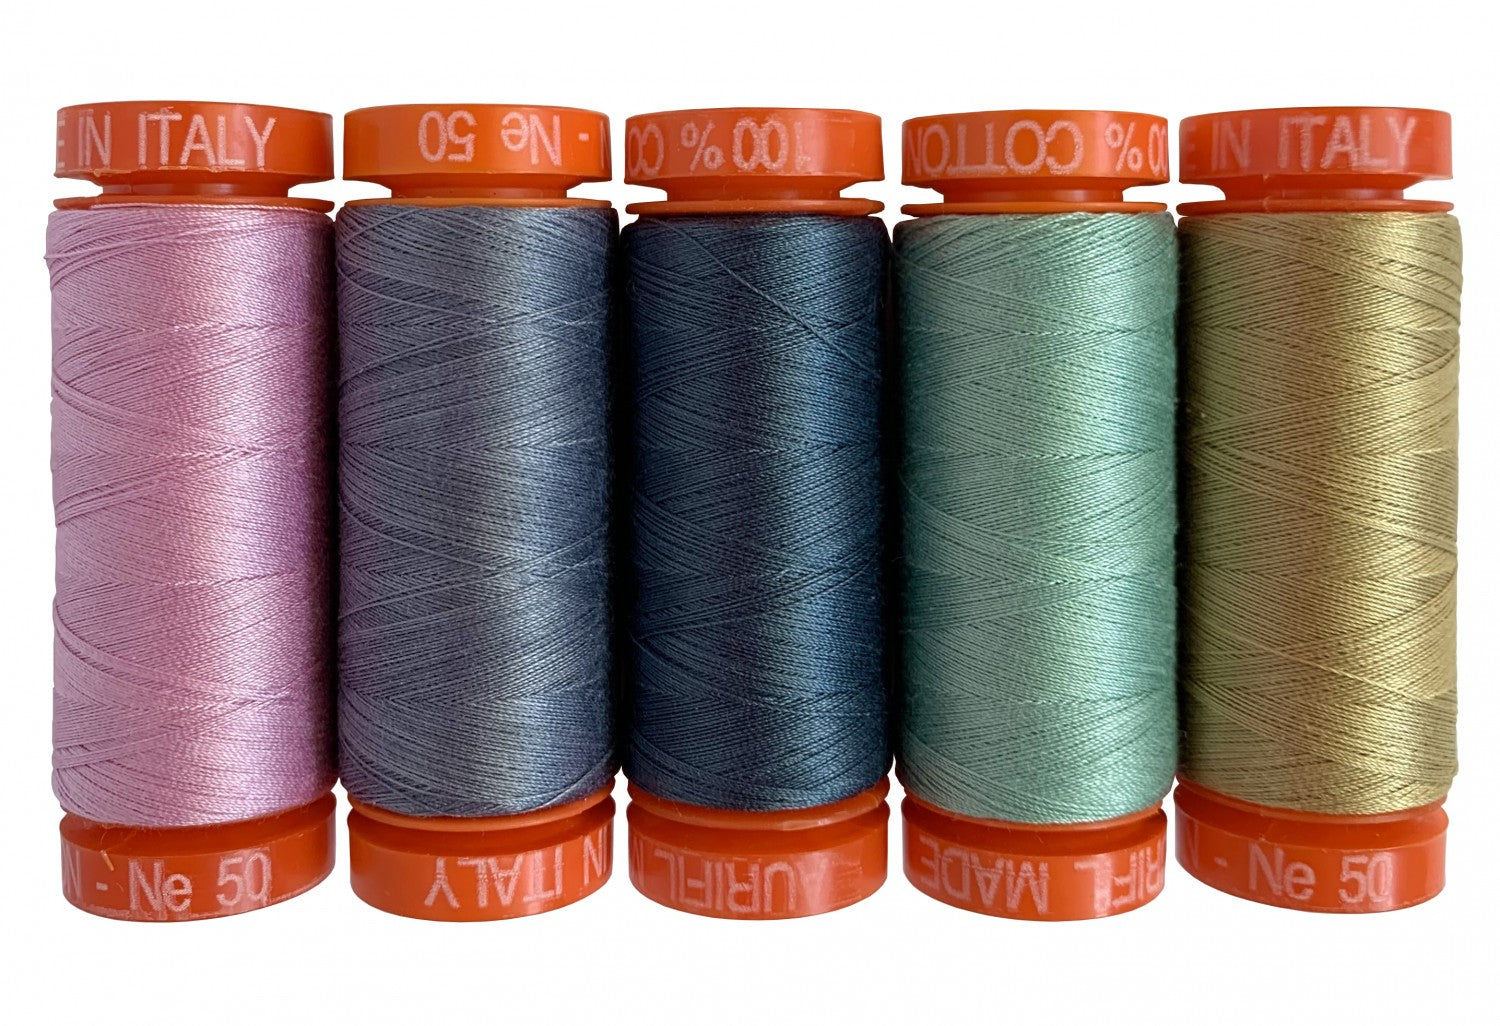 Aurifil Thread - Shop Aurifil Quilting Thread Sets & Collections on Sale